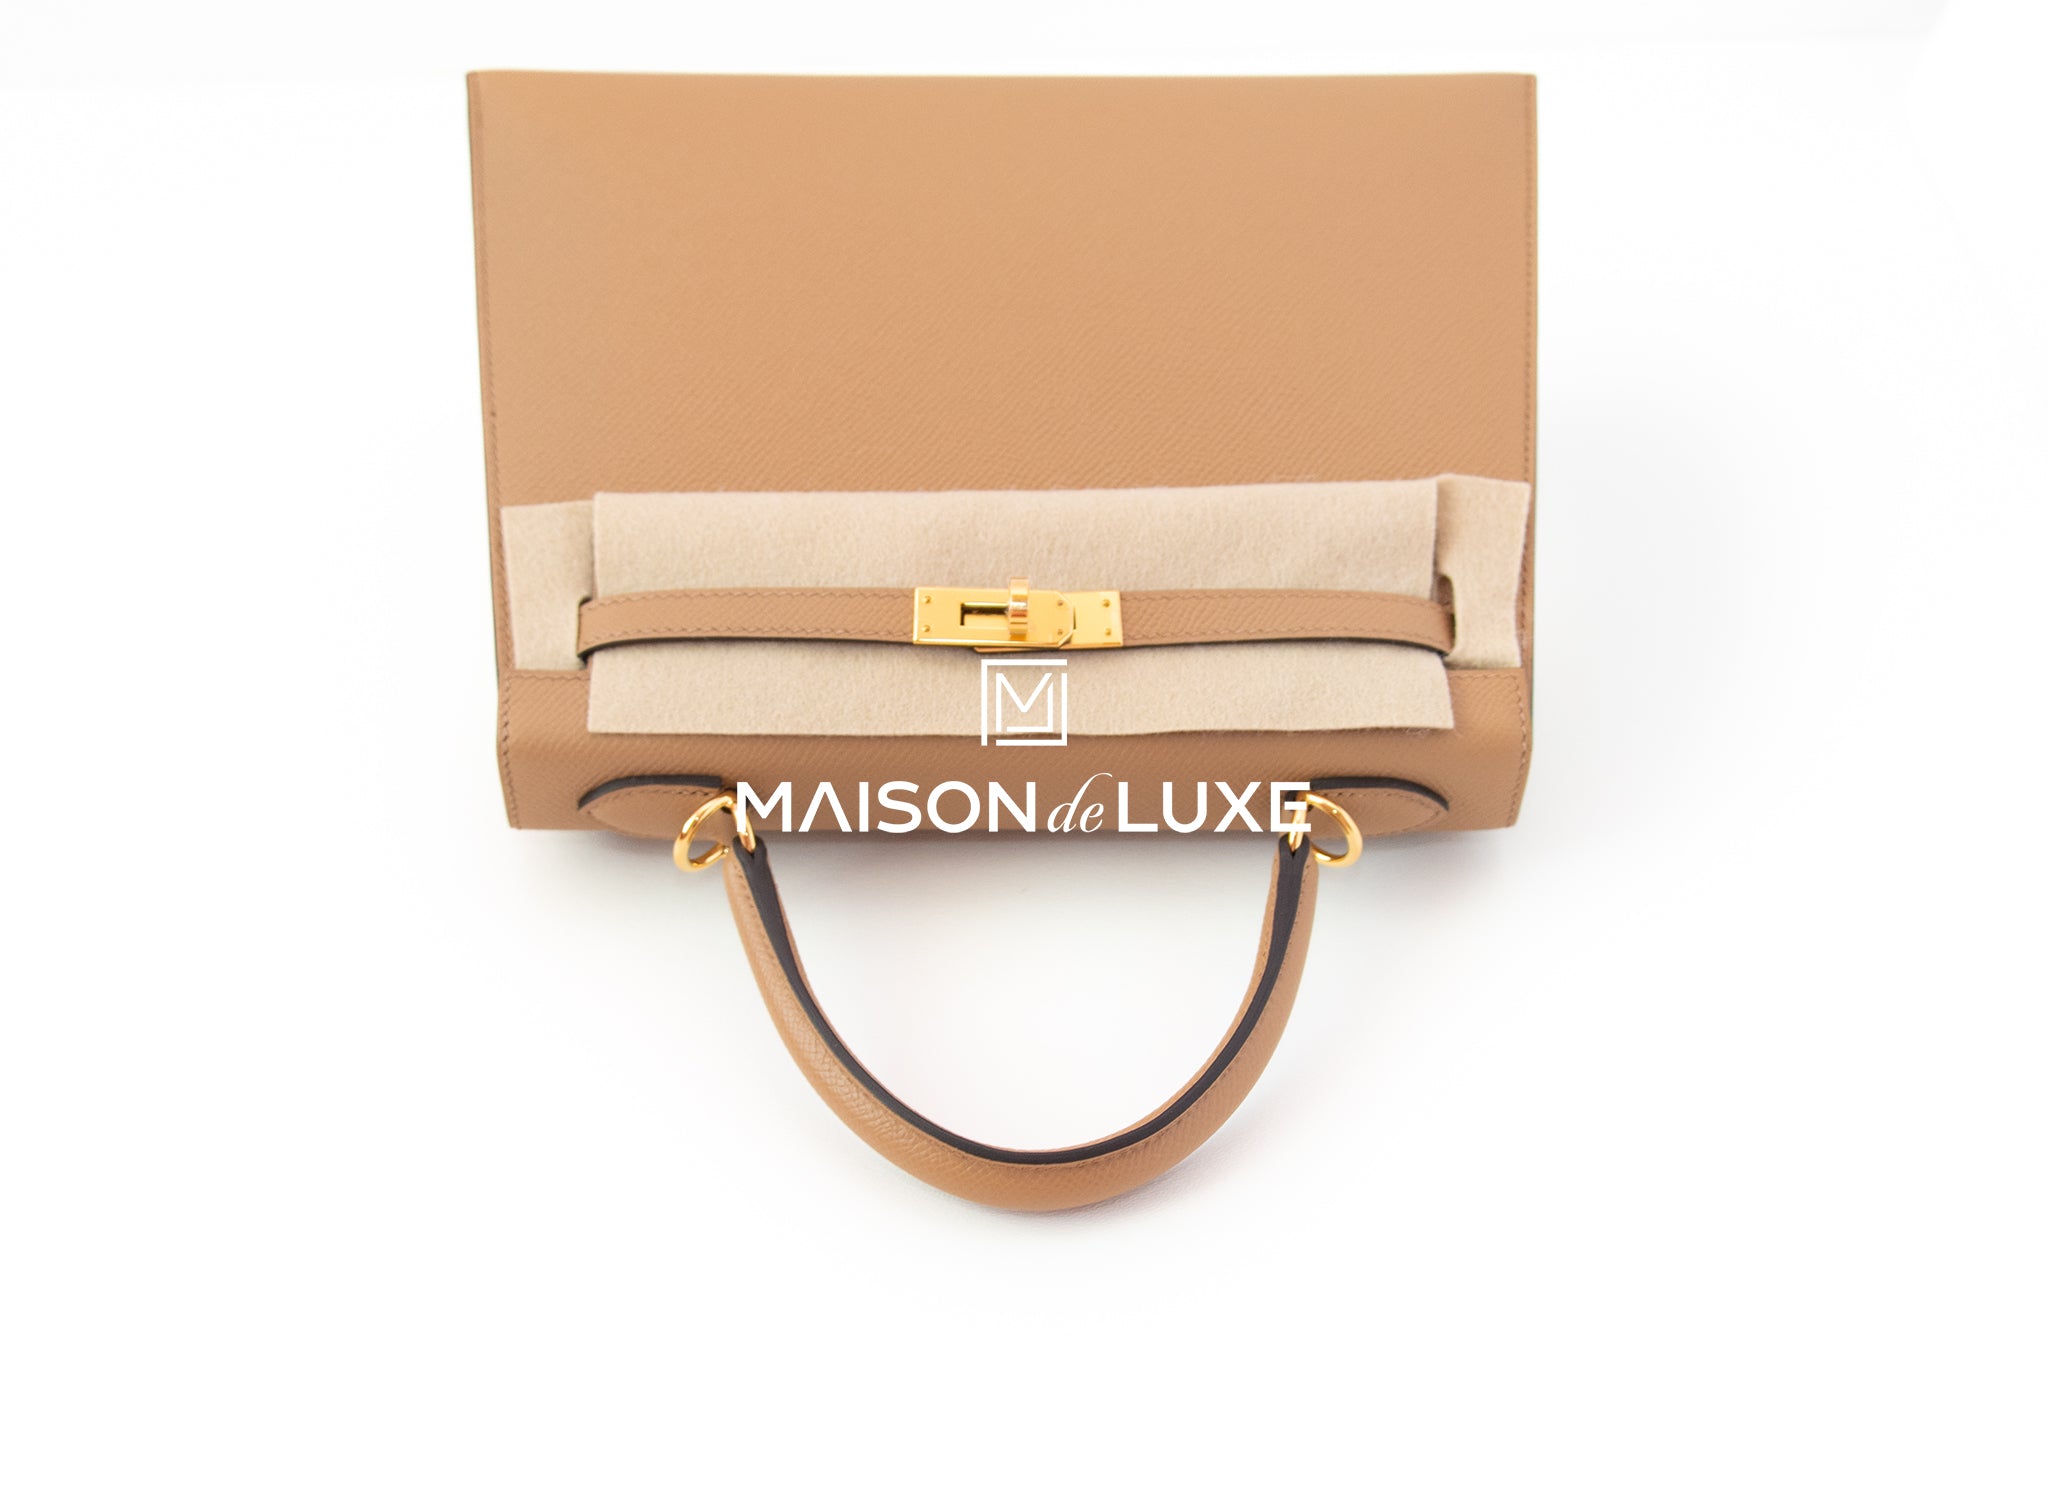 Hermès Sellier Kelly Handbag